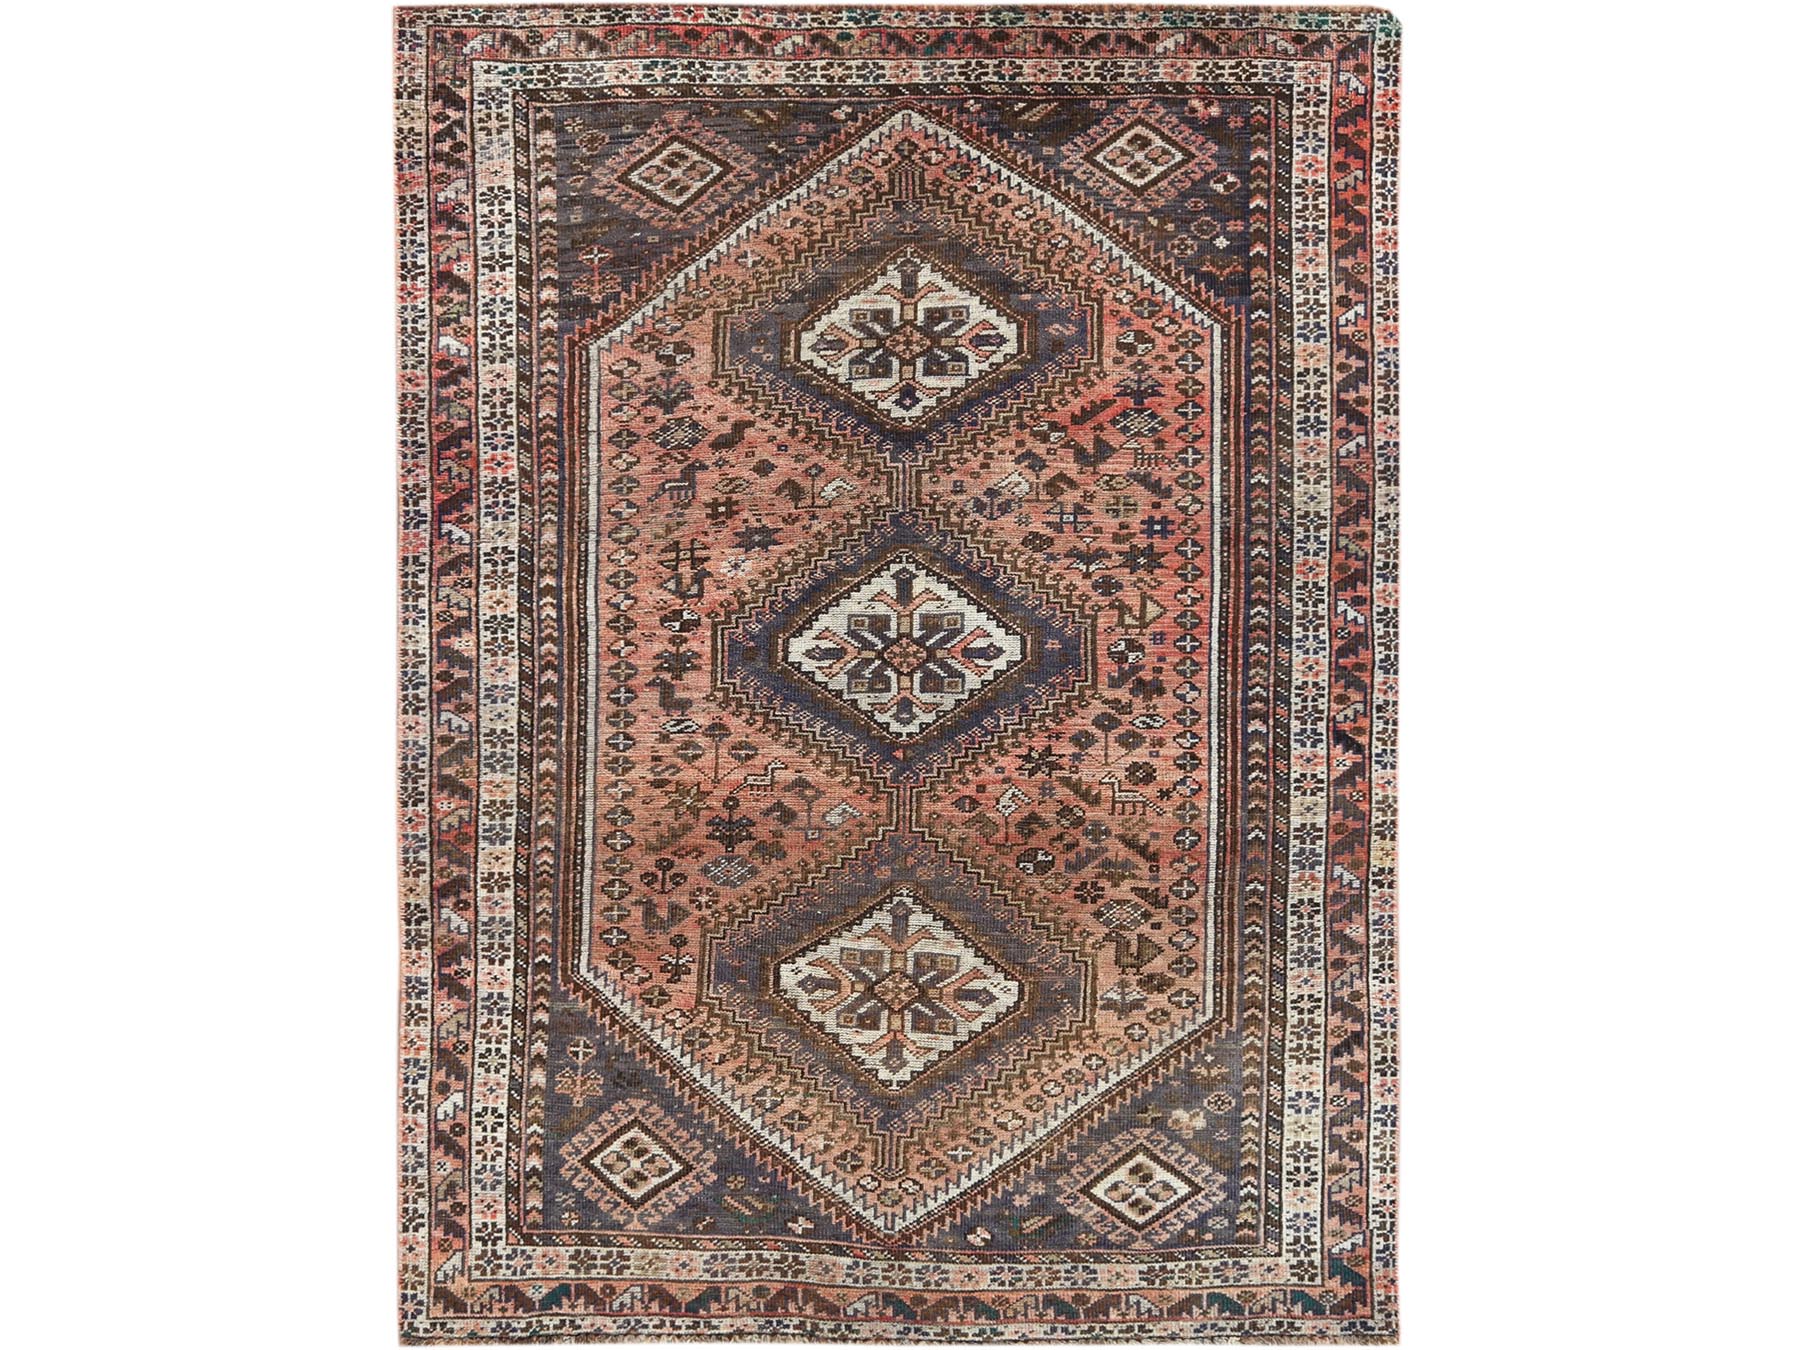 A2Z Rug|Qashqai 5578 Southwestern Medallion Boho Blue Persian Style Pattern|Entrance Hallway Hall Stair Area rug|Soft Short Pile|60x230cm 112x77ft|Traditional RunnerArea Carpet